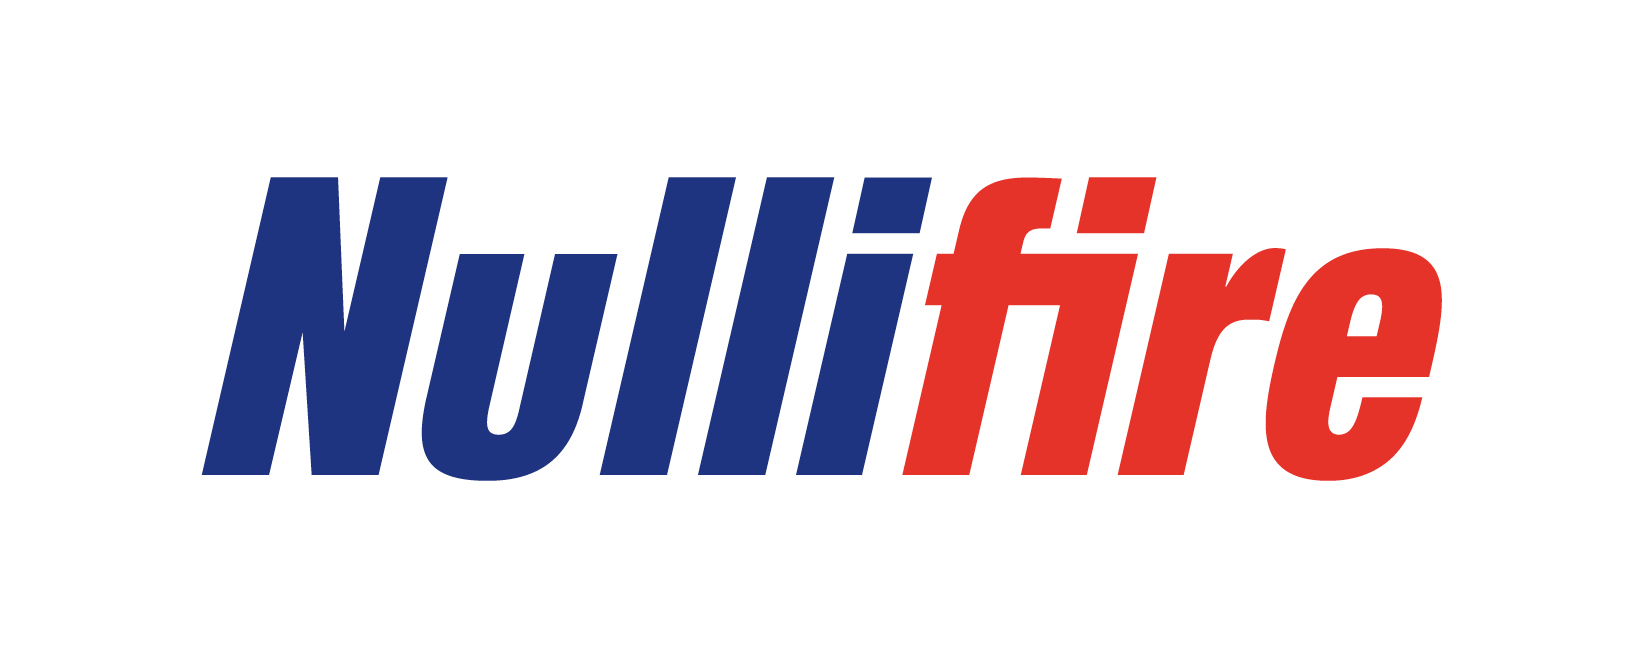 Nullifire logo